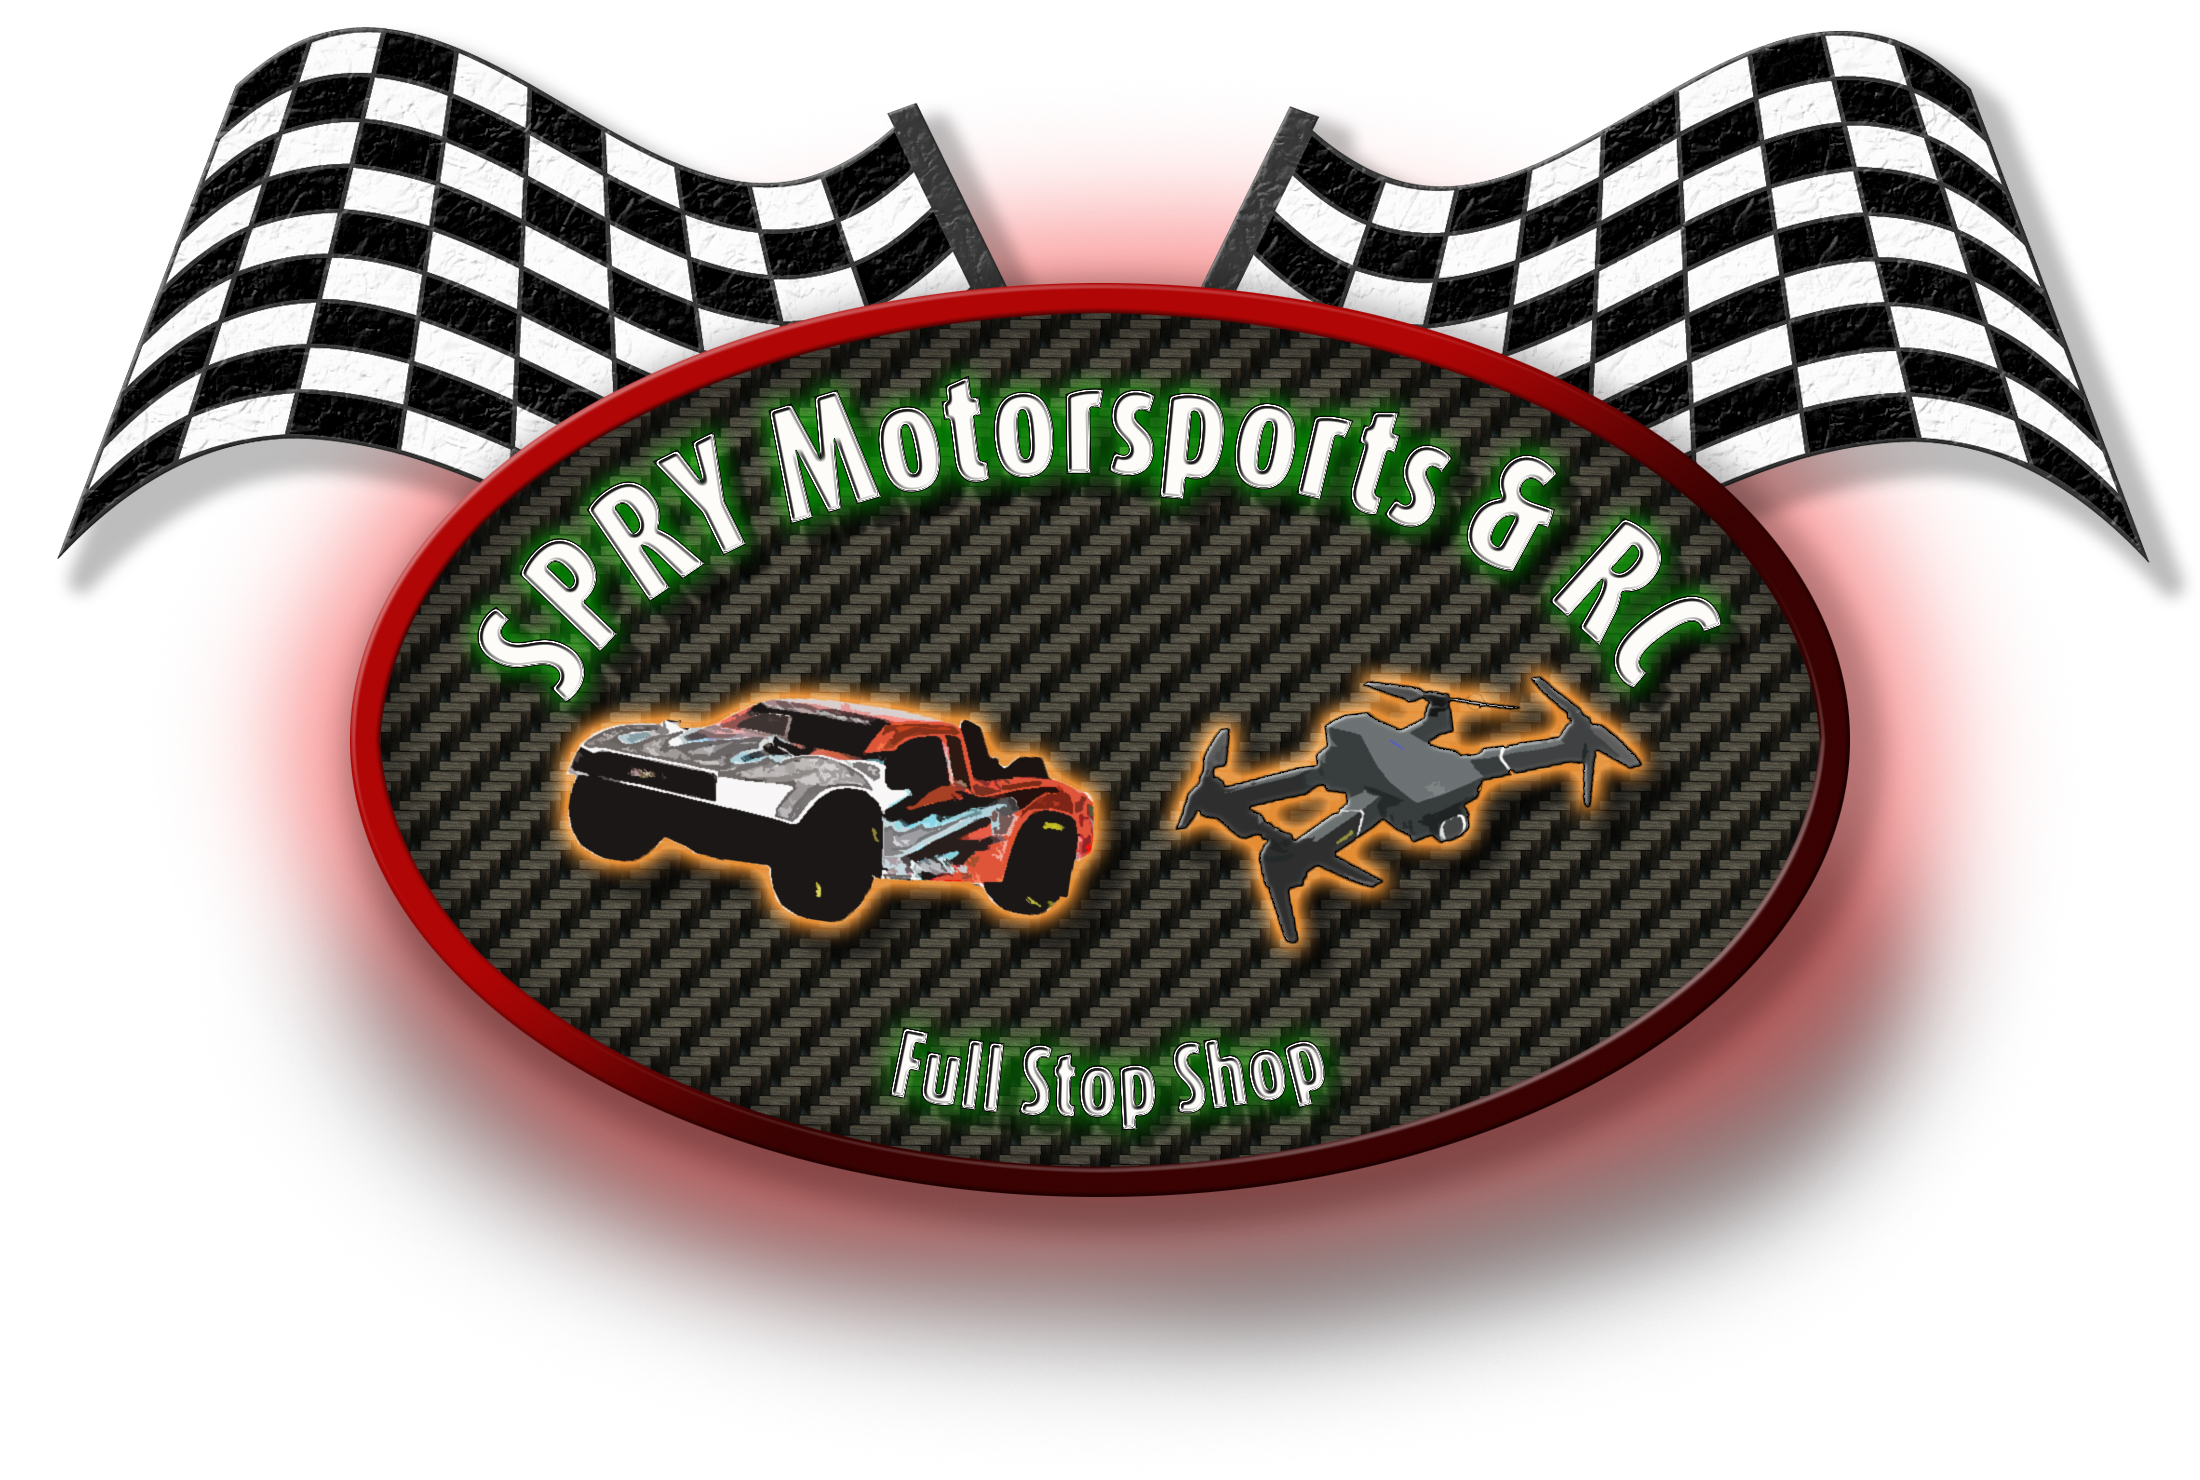 SpryRC Motorsports